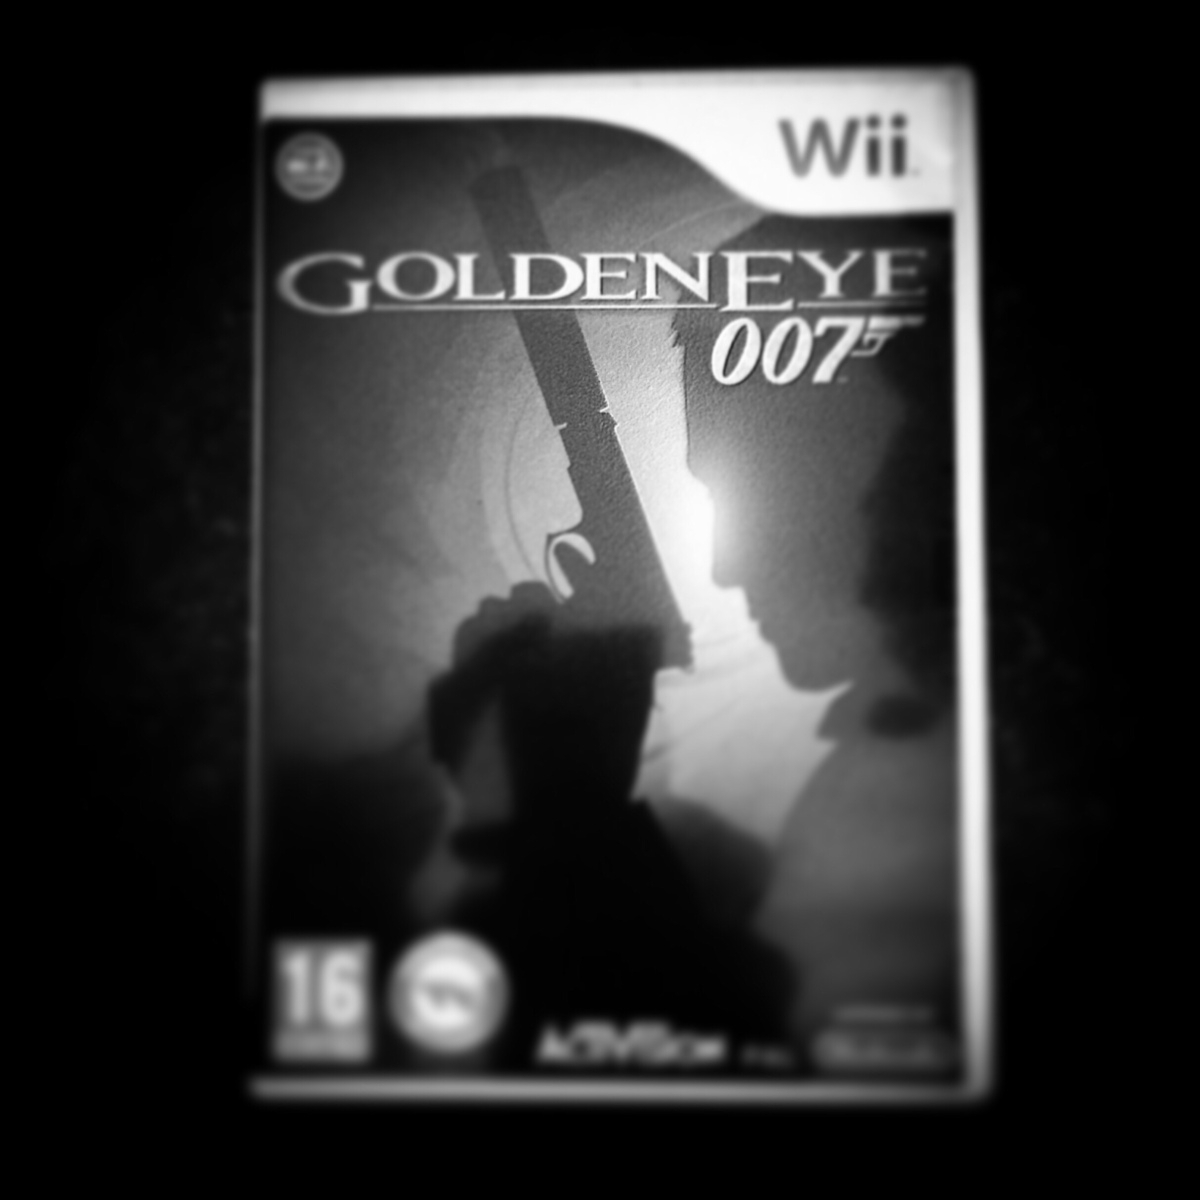 GoldenEye 007 Wii - Archives - 007 Classic 